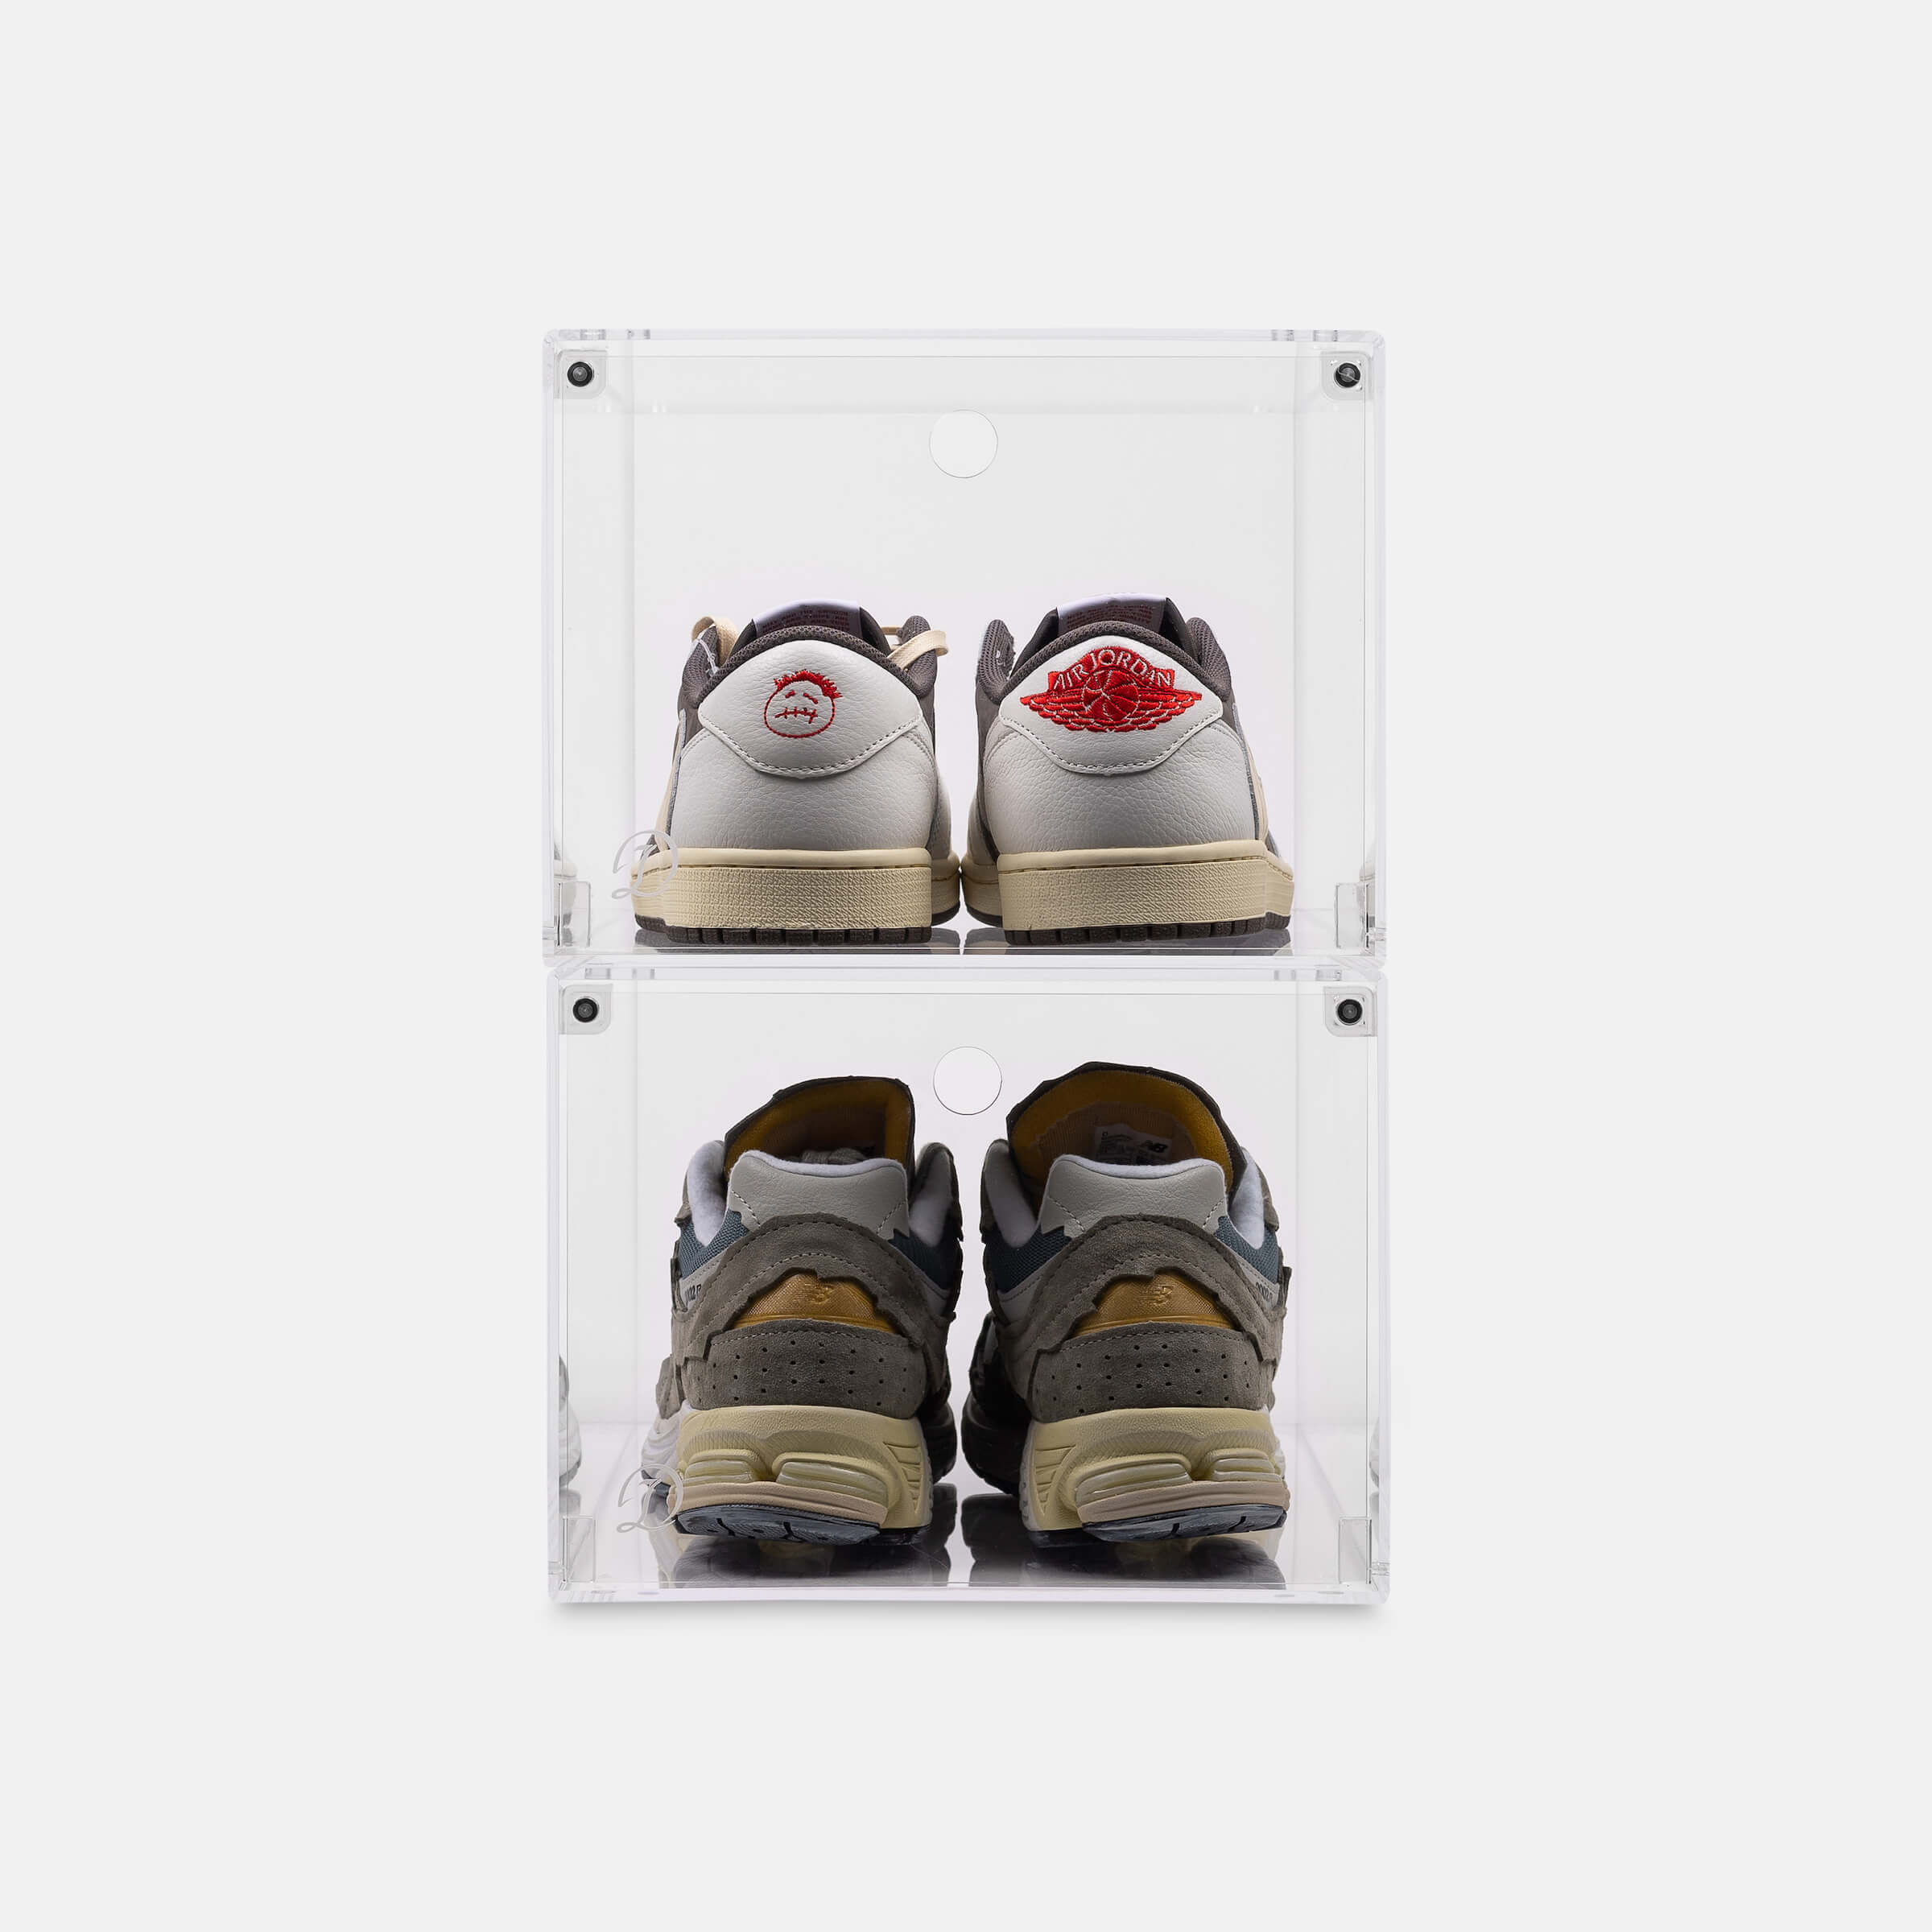 Looksee Designs - Premium Acrylic Shoe Display Case - Clear Shoe Boxes - Shoes Box Storage - Box Shoes - Shoe Boxes